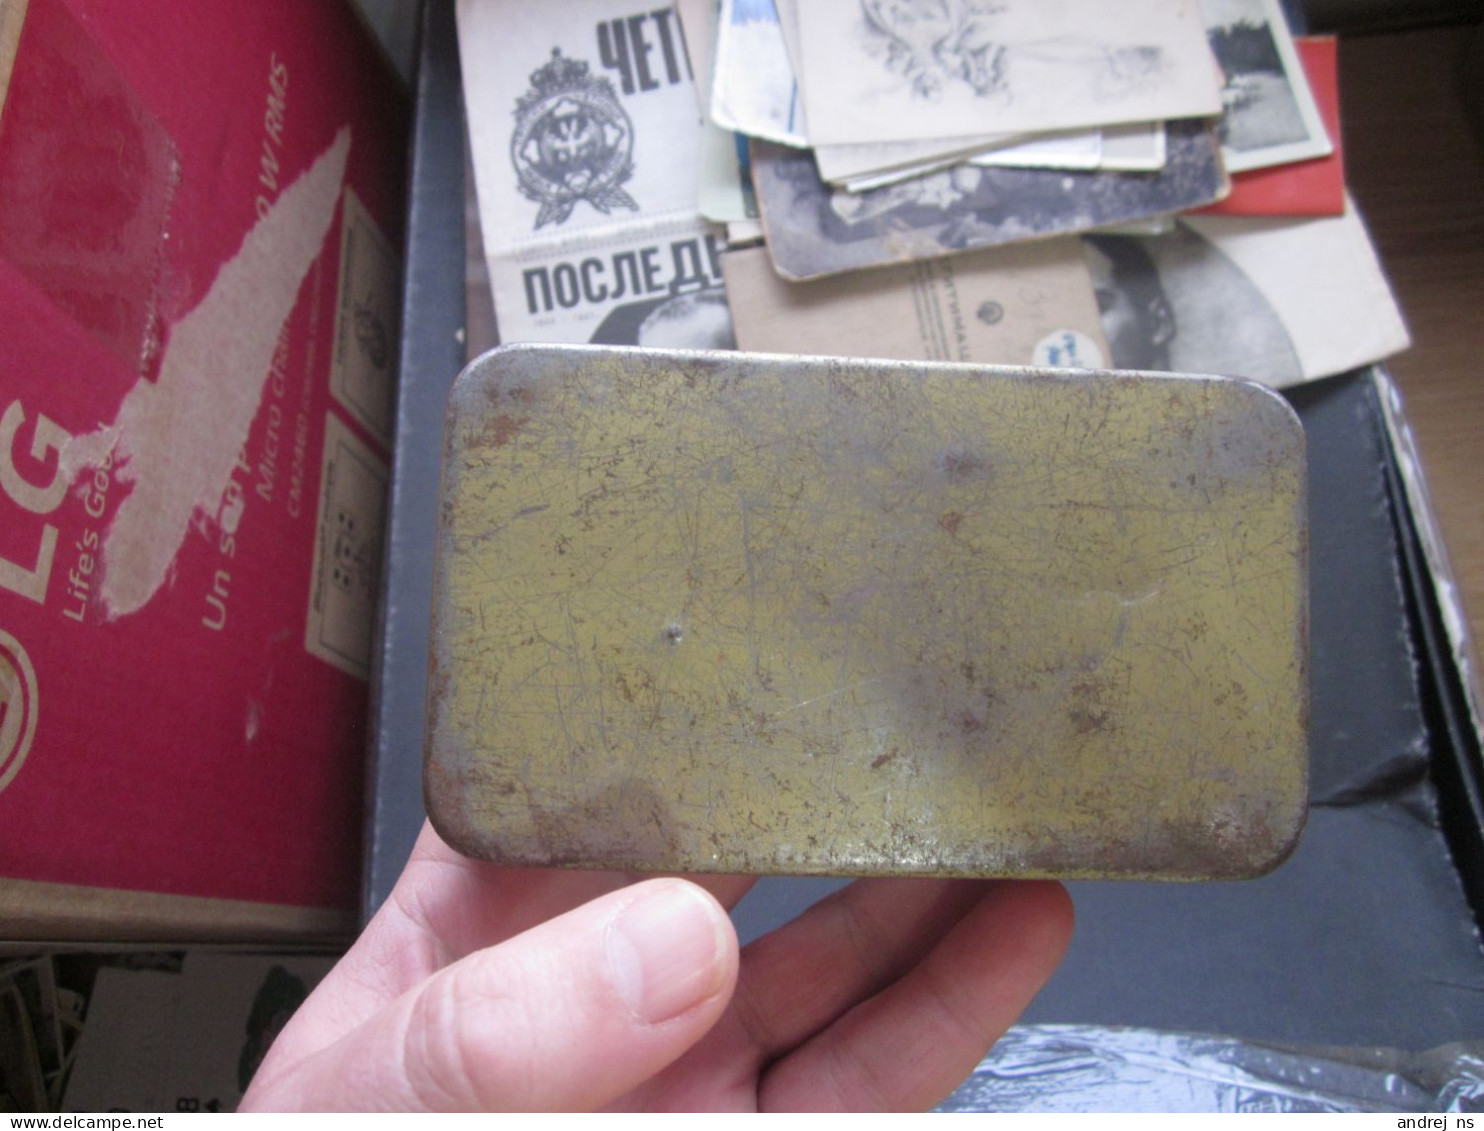 Old Tin Box Orient Duft Leicht Und Mild Tabak 50 Grams - Empty Tobacco Boxes